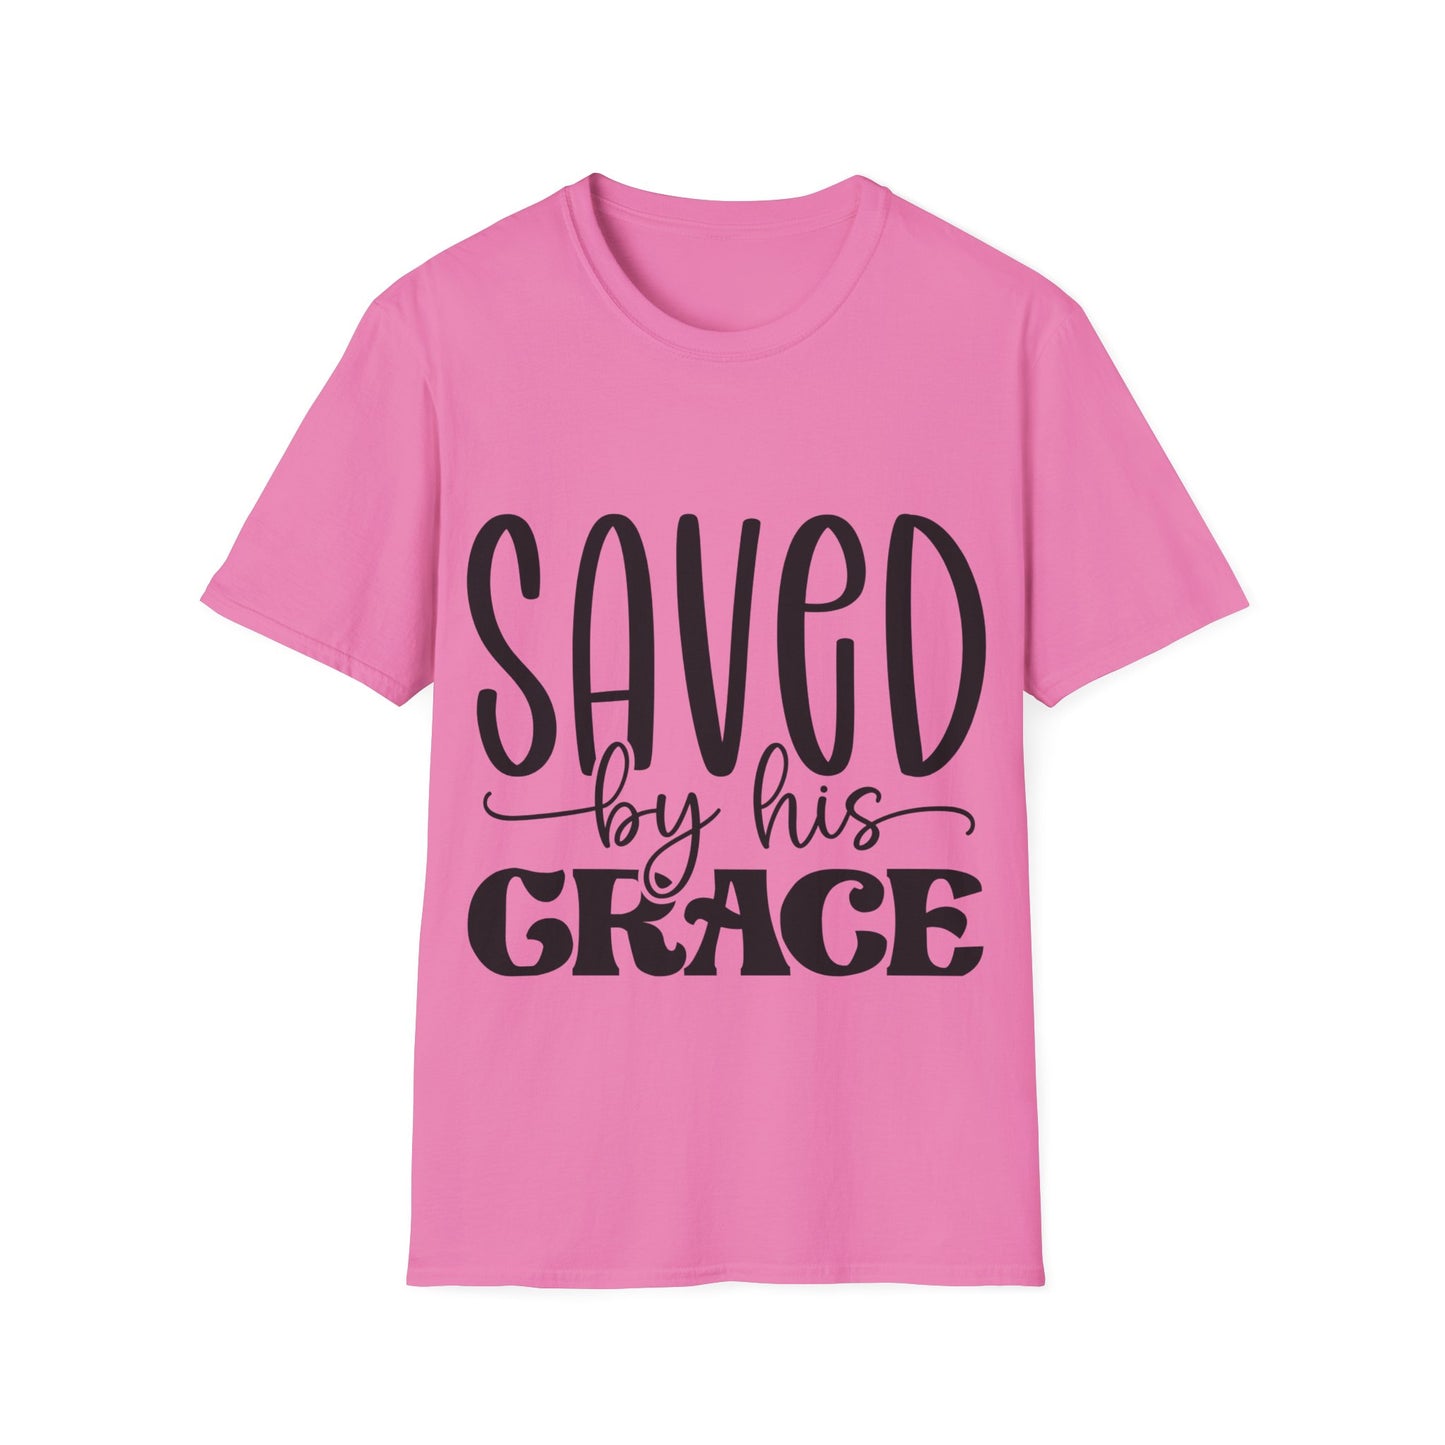 Saved by His Grace Triple Viking T-Shirt